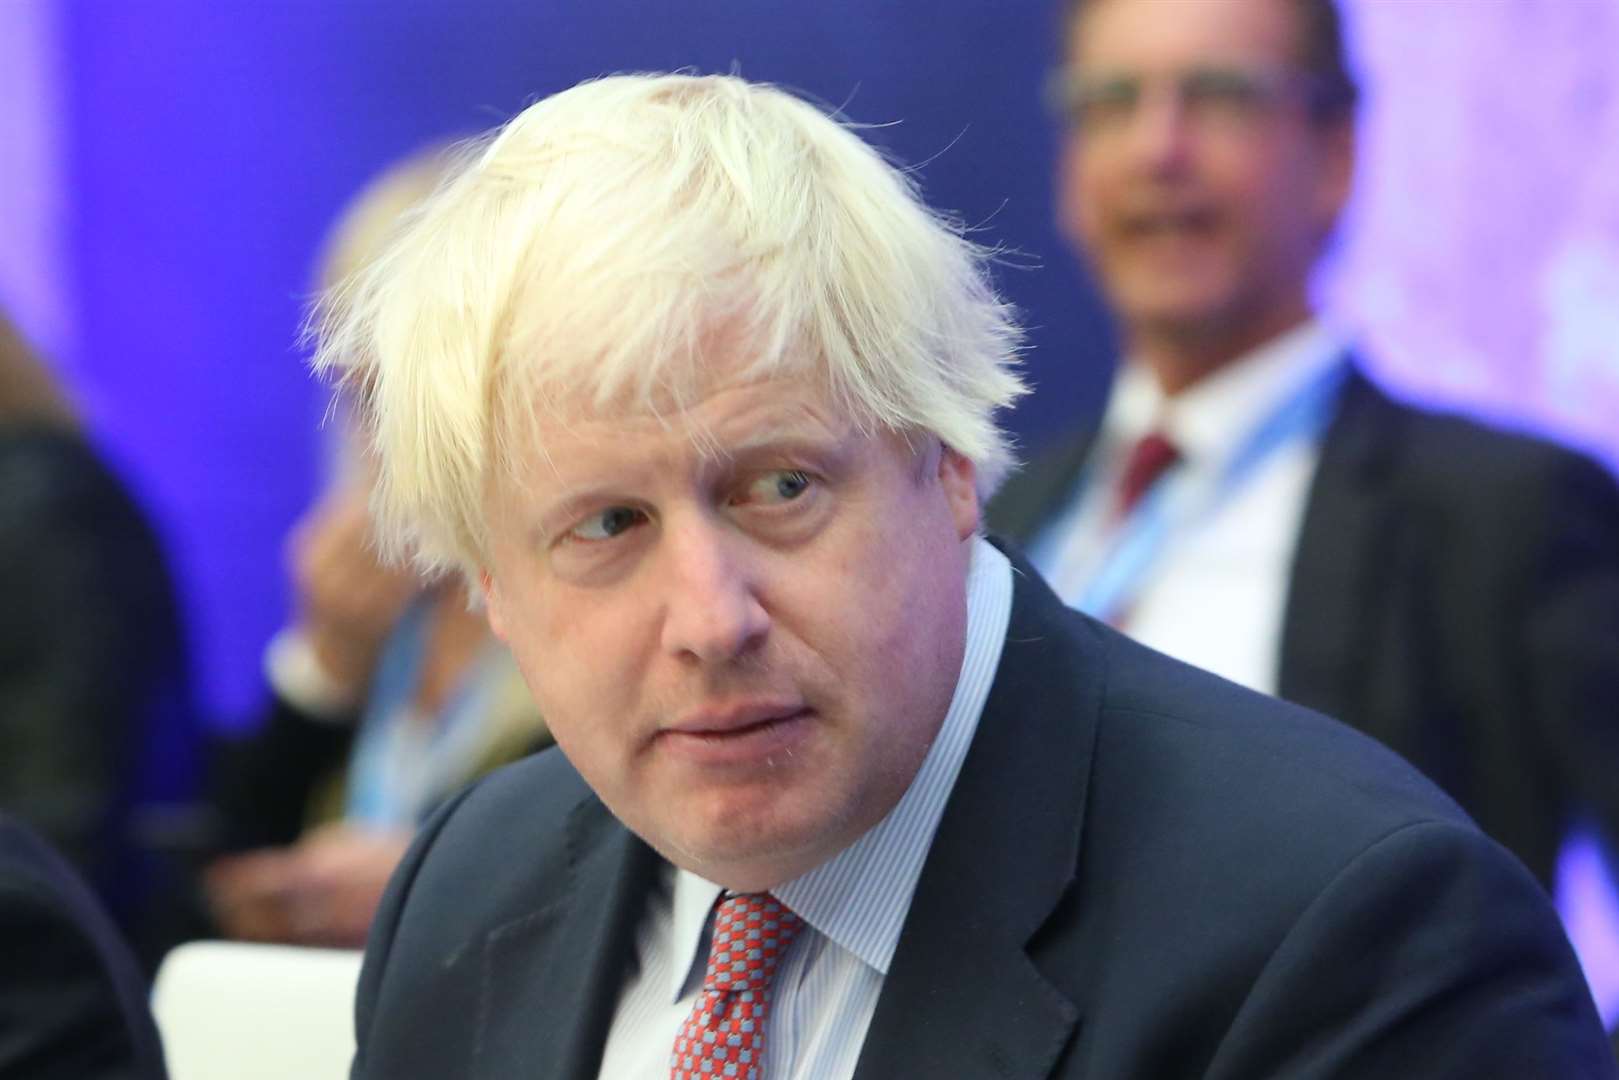 Boris Johnson is set to announce a resettlement scheme